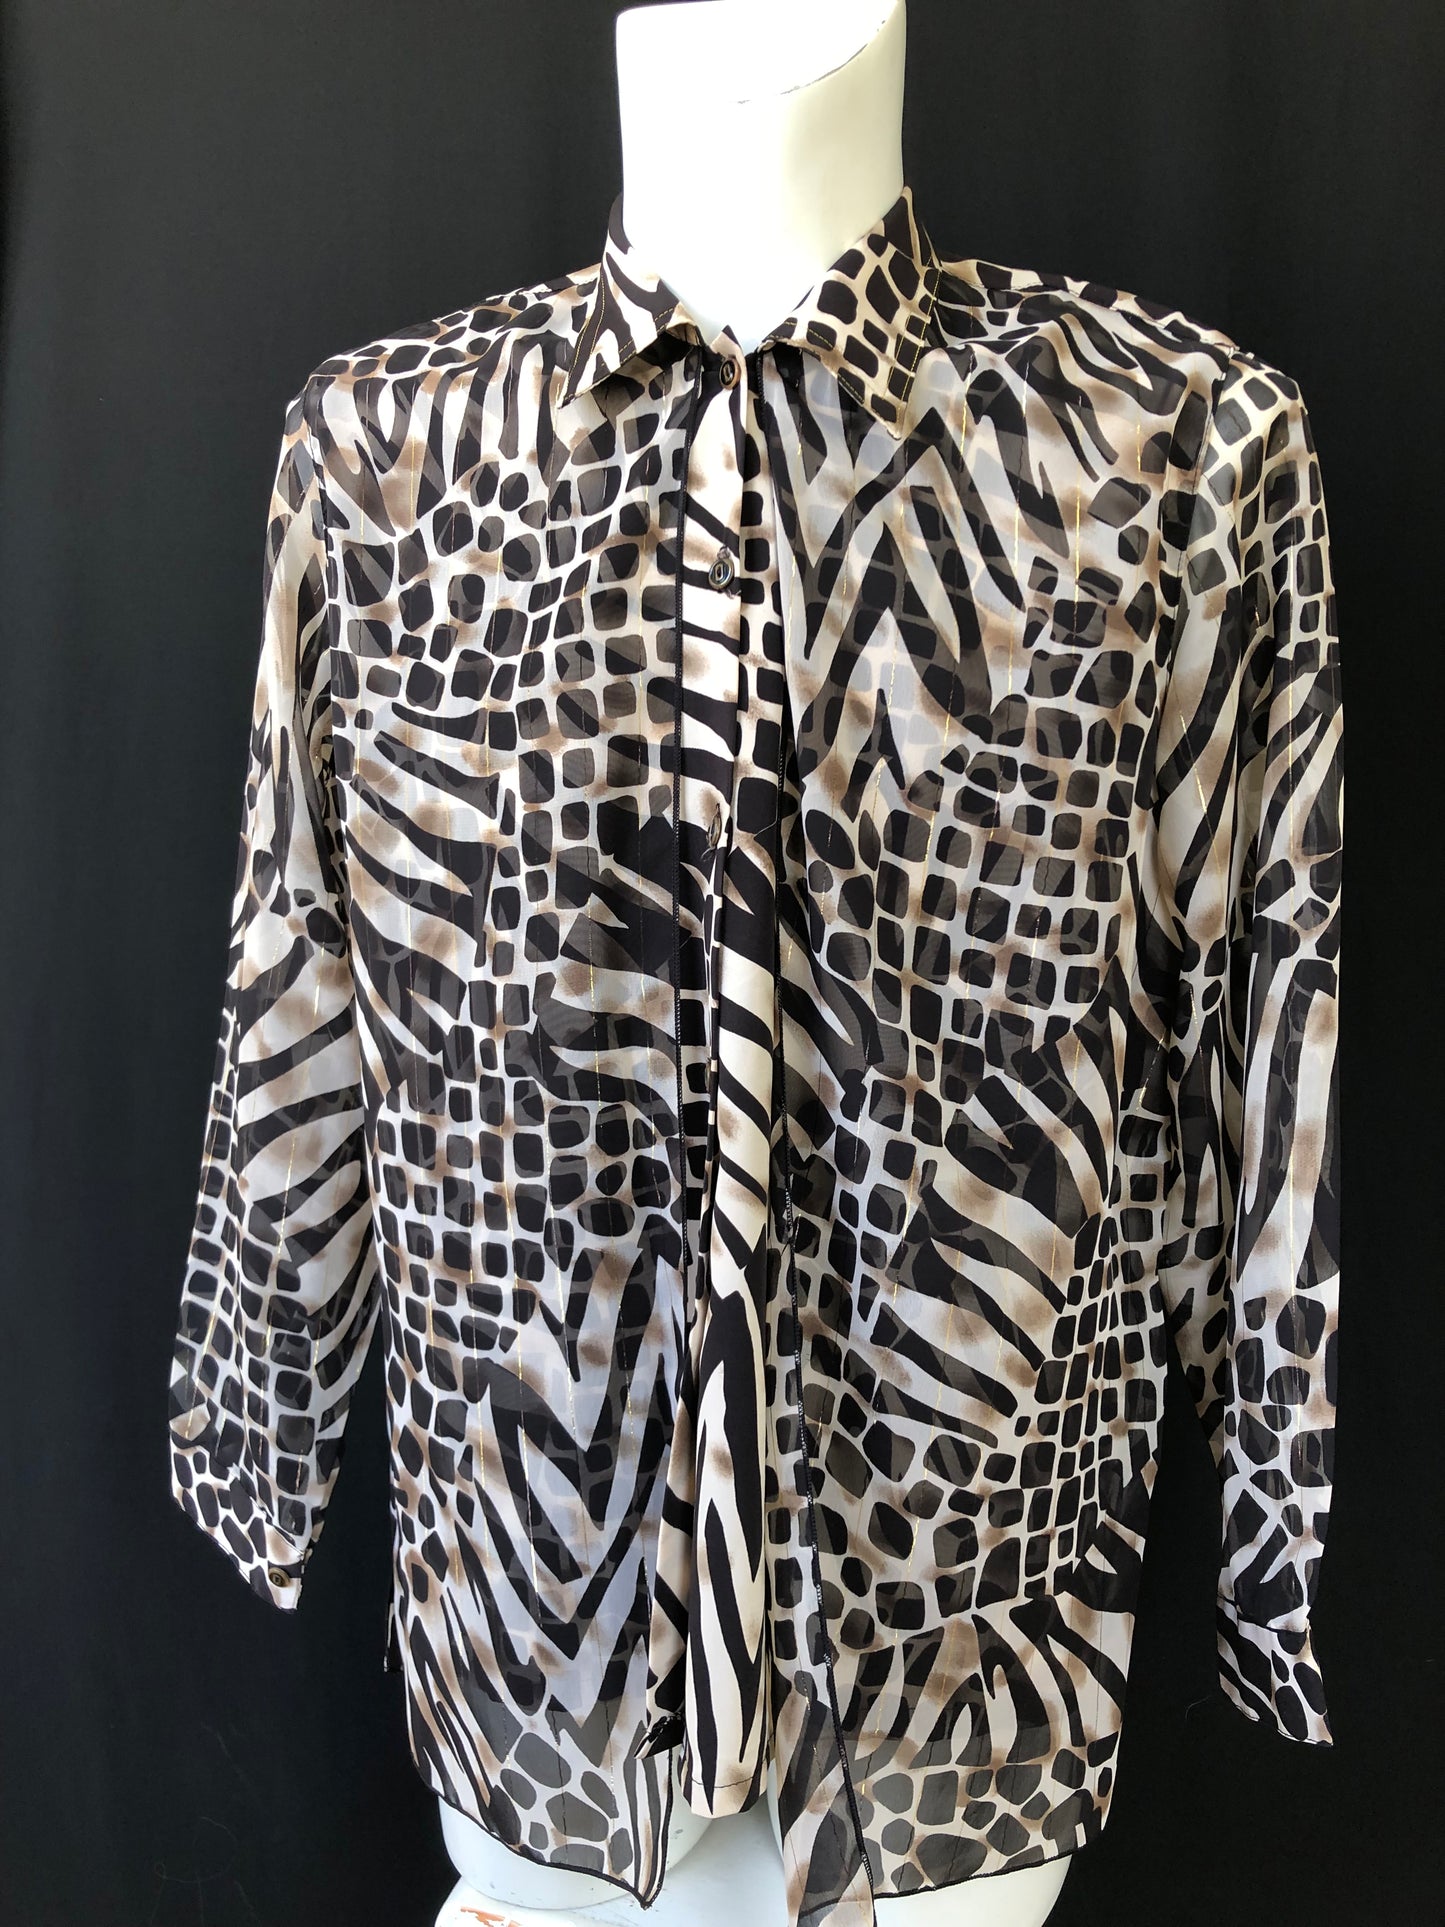 Wild Zebra Shirt